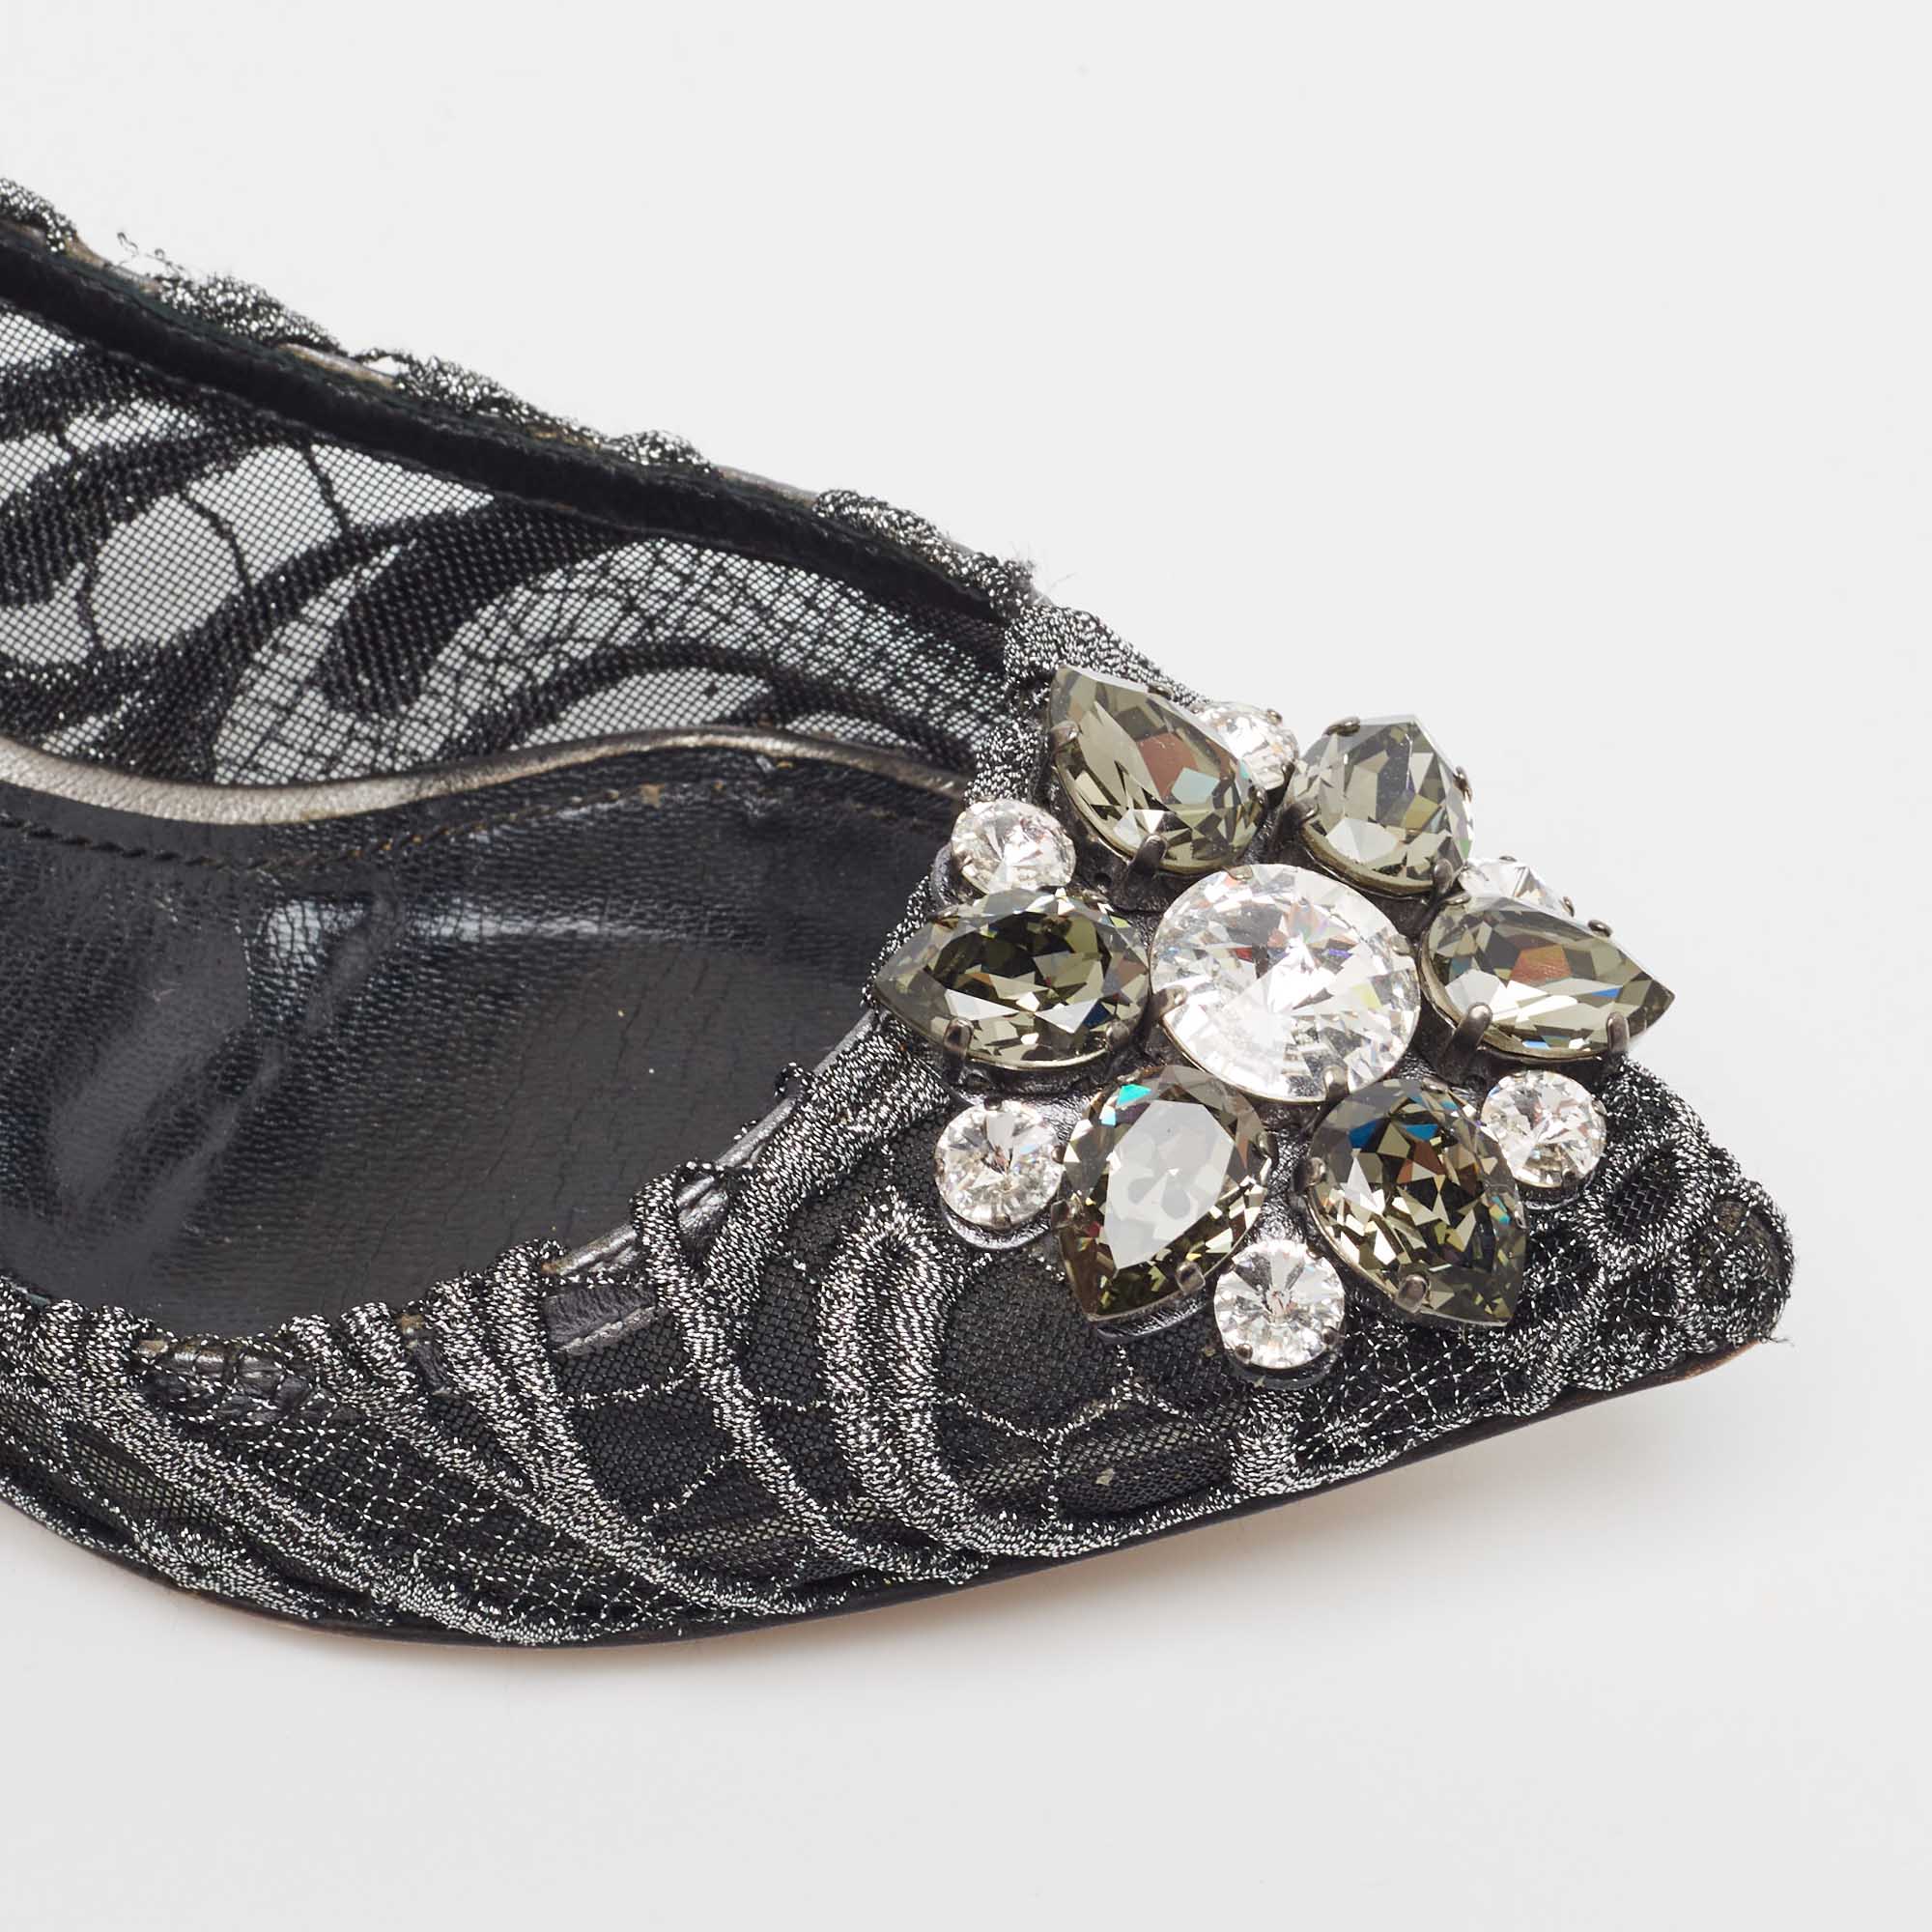 Dolce & Gabbana Silver/Black Lace Bellucci Crystal Embellished Kitten Heel Pumps Size 37